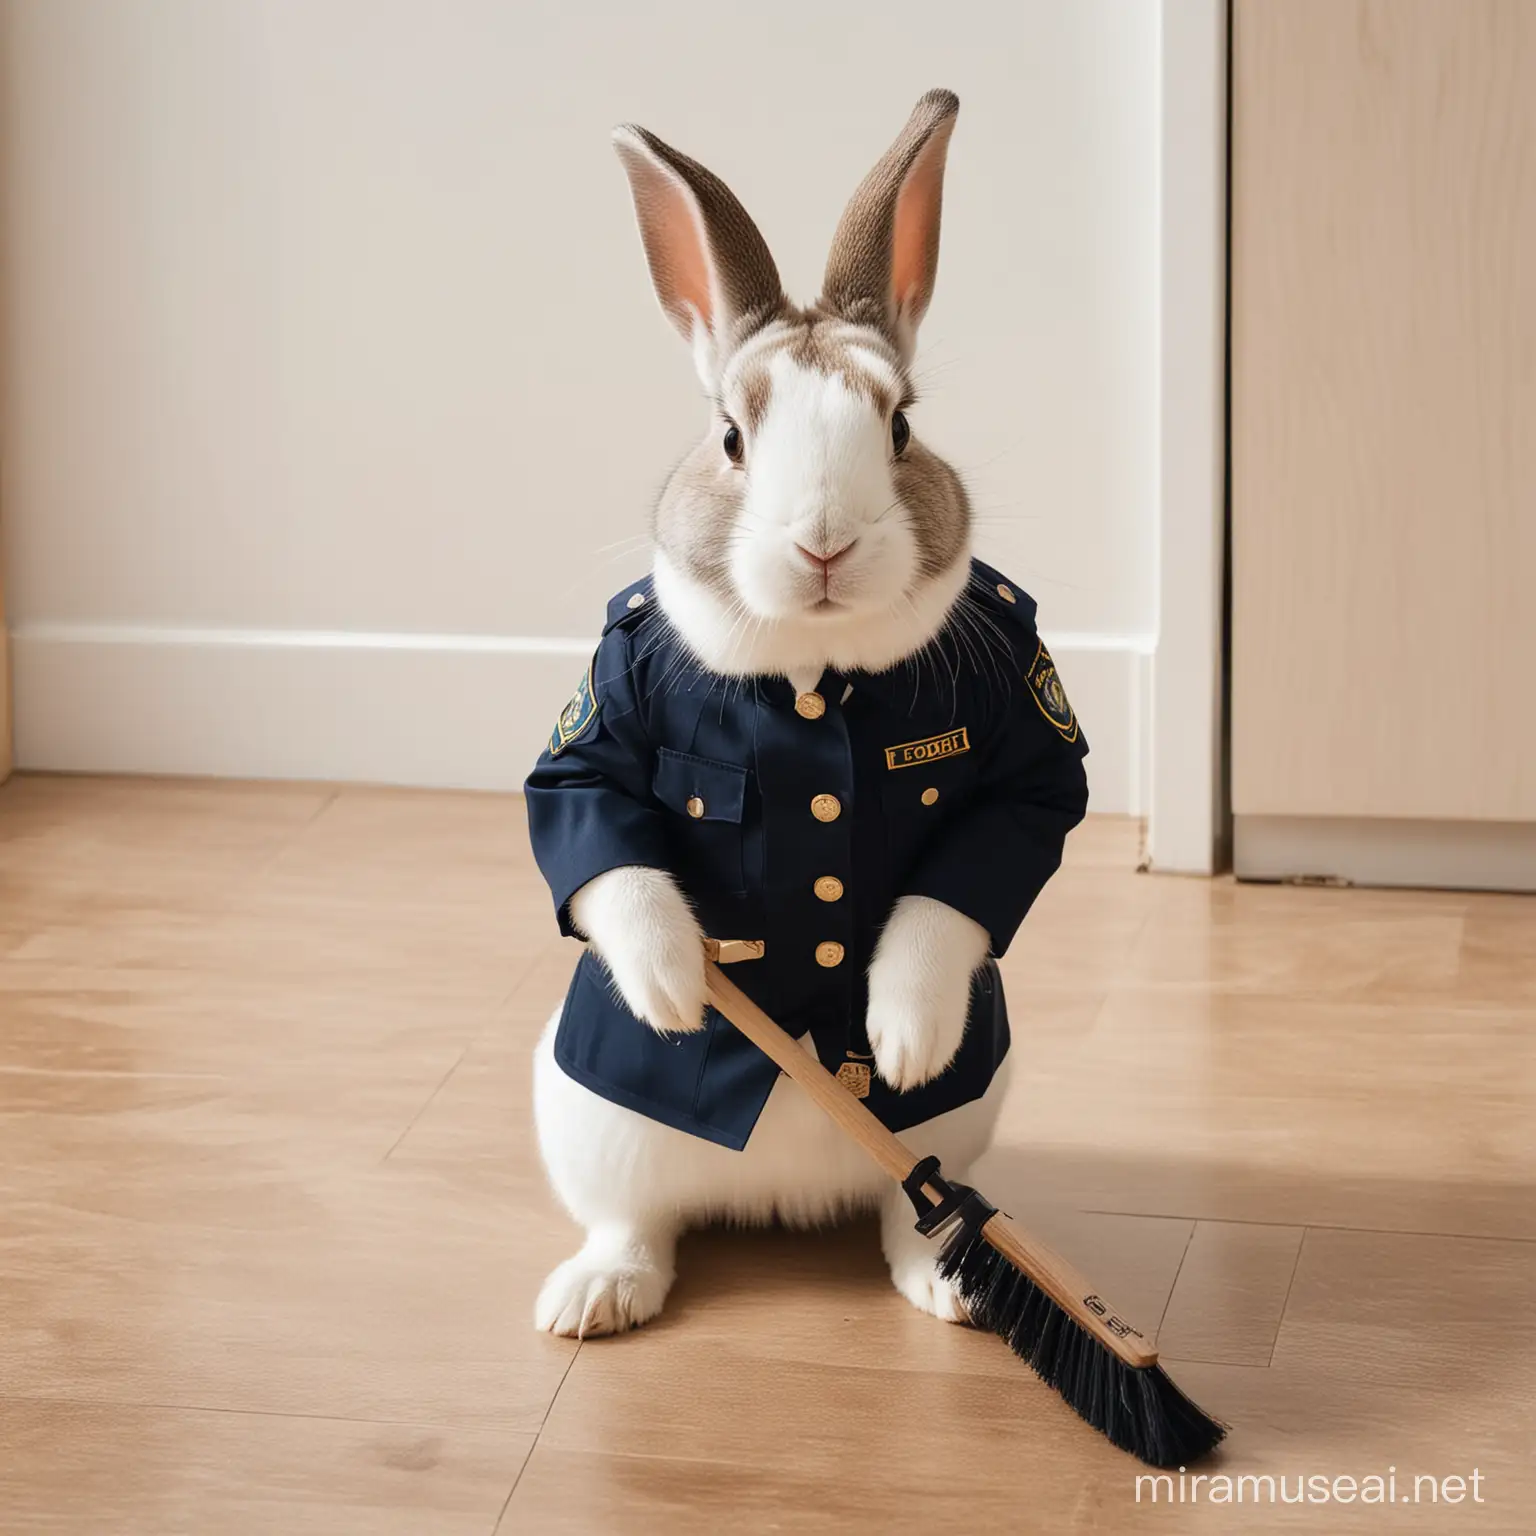 Rabbit in security uniform brushing up the floor